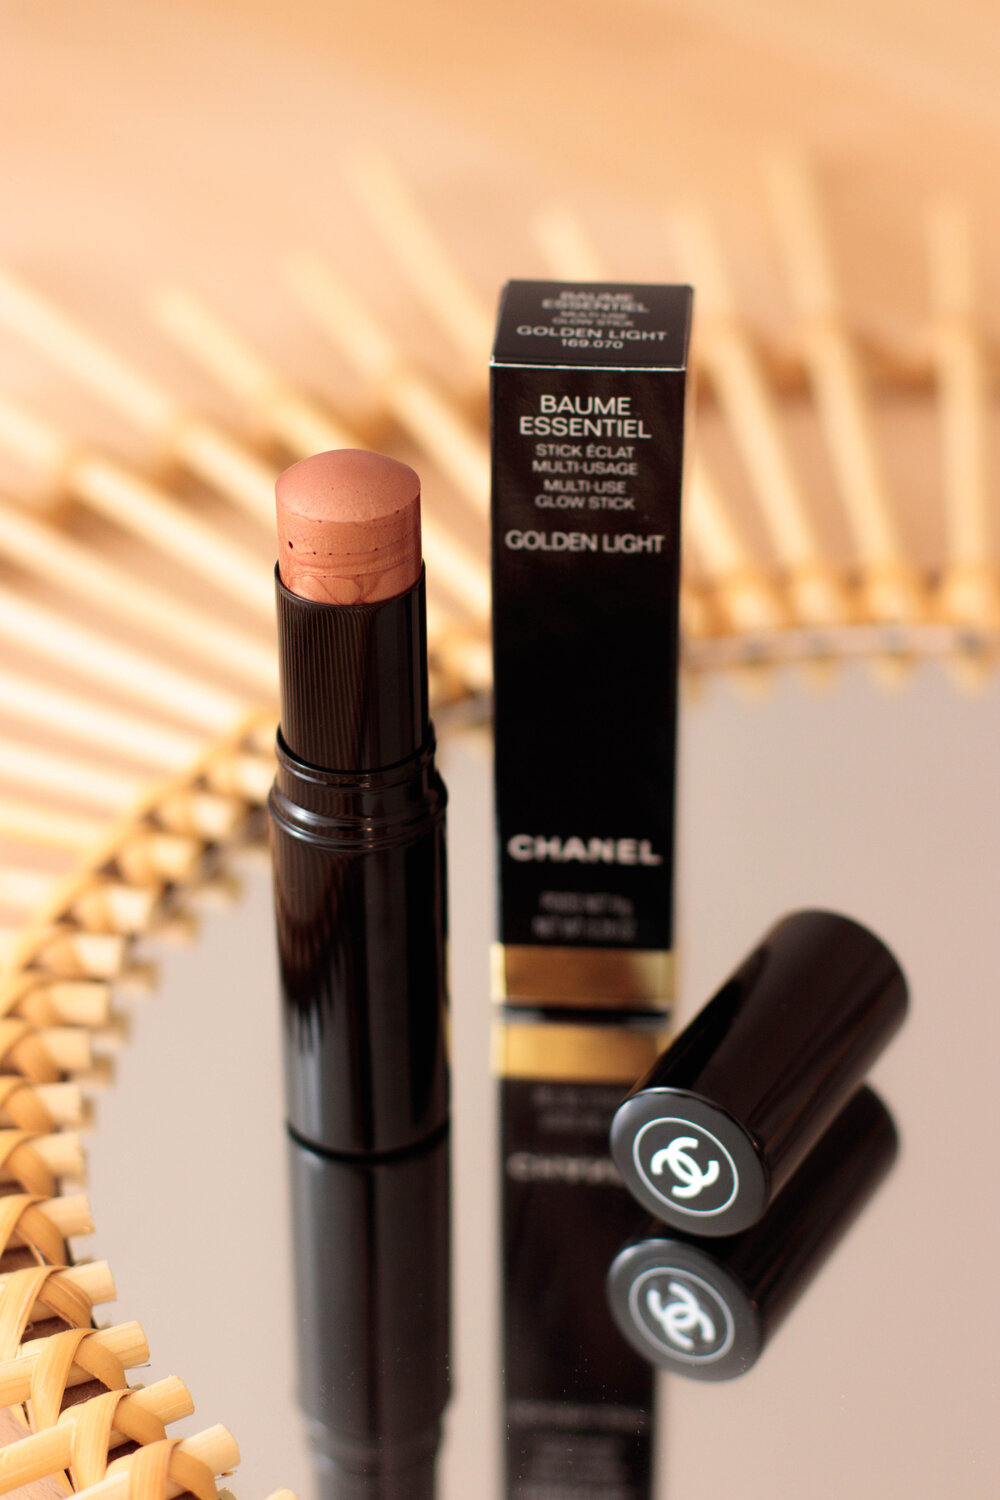 Chanel Multi-Usage Golden mon avis ! — Pauuulette - Blog Makeup